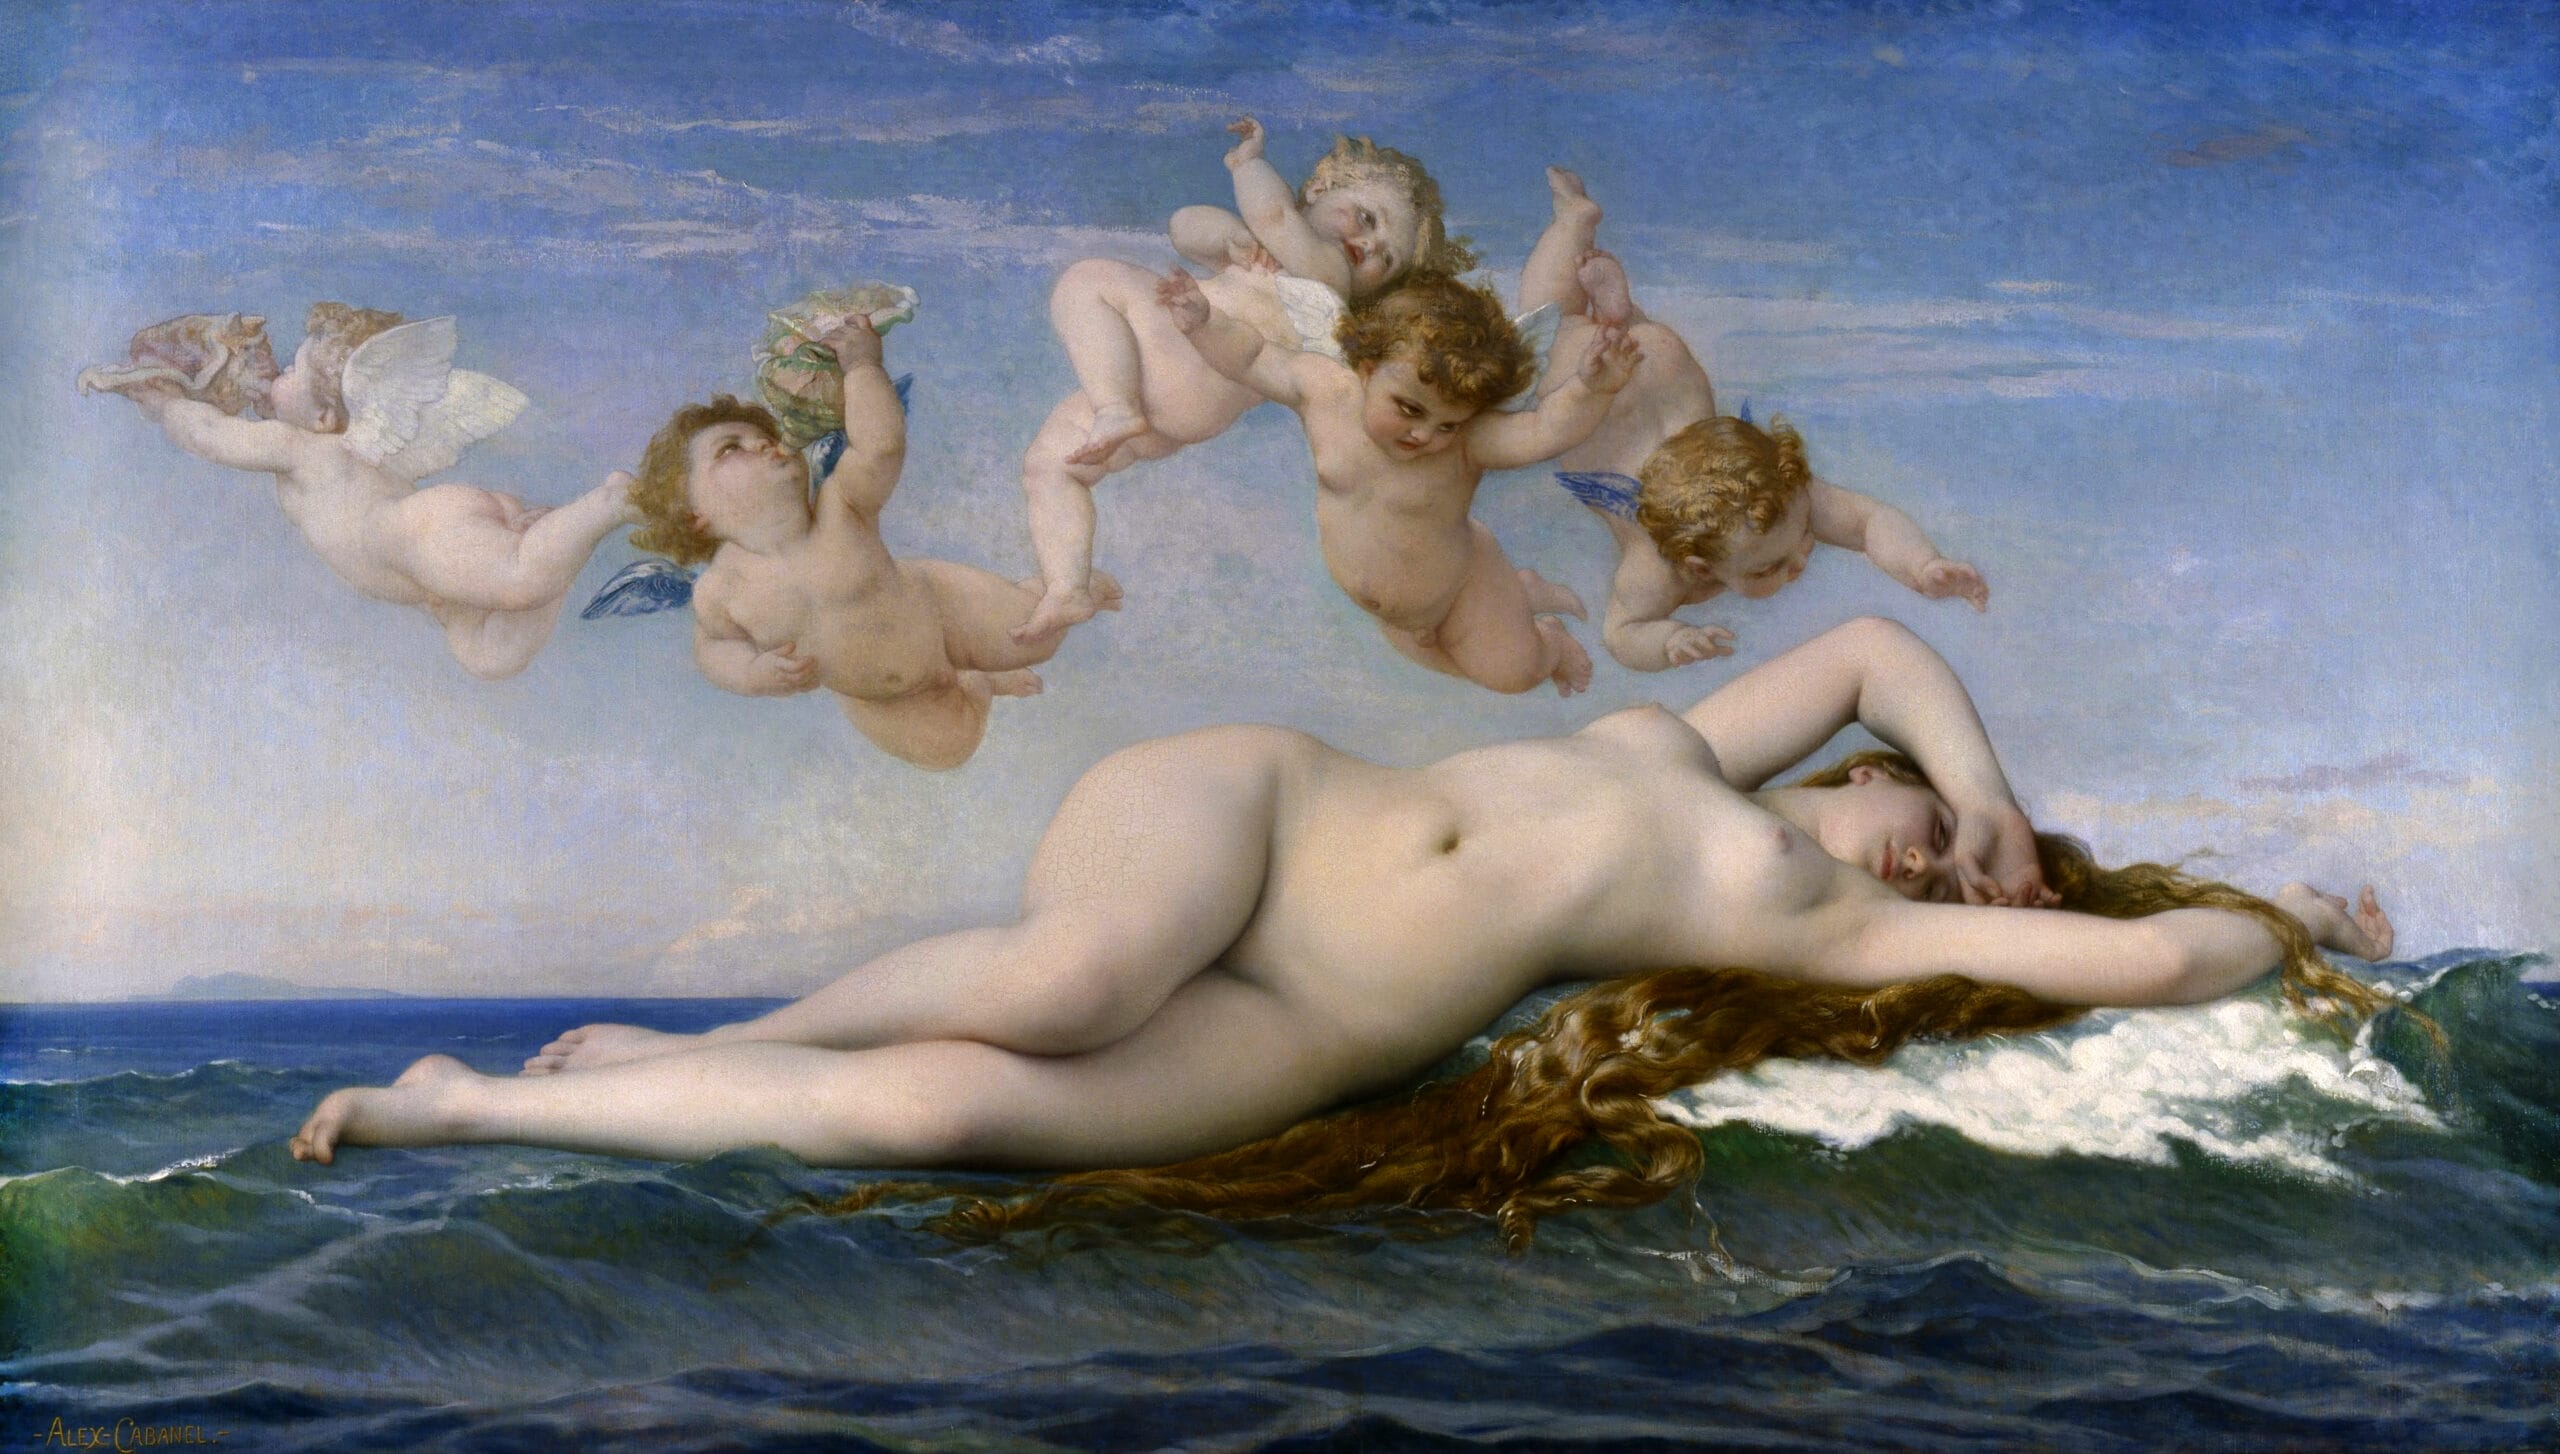 Alexandre_Cabanel_-_The_Birth_of_Venus_-1863